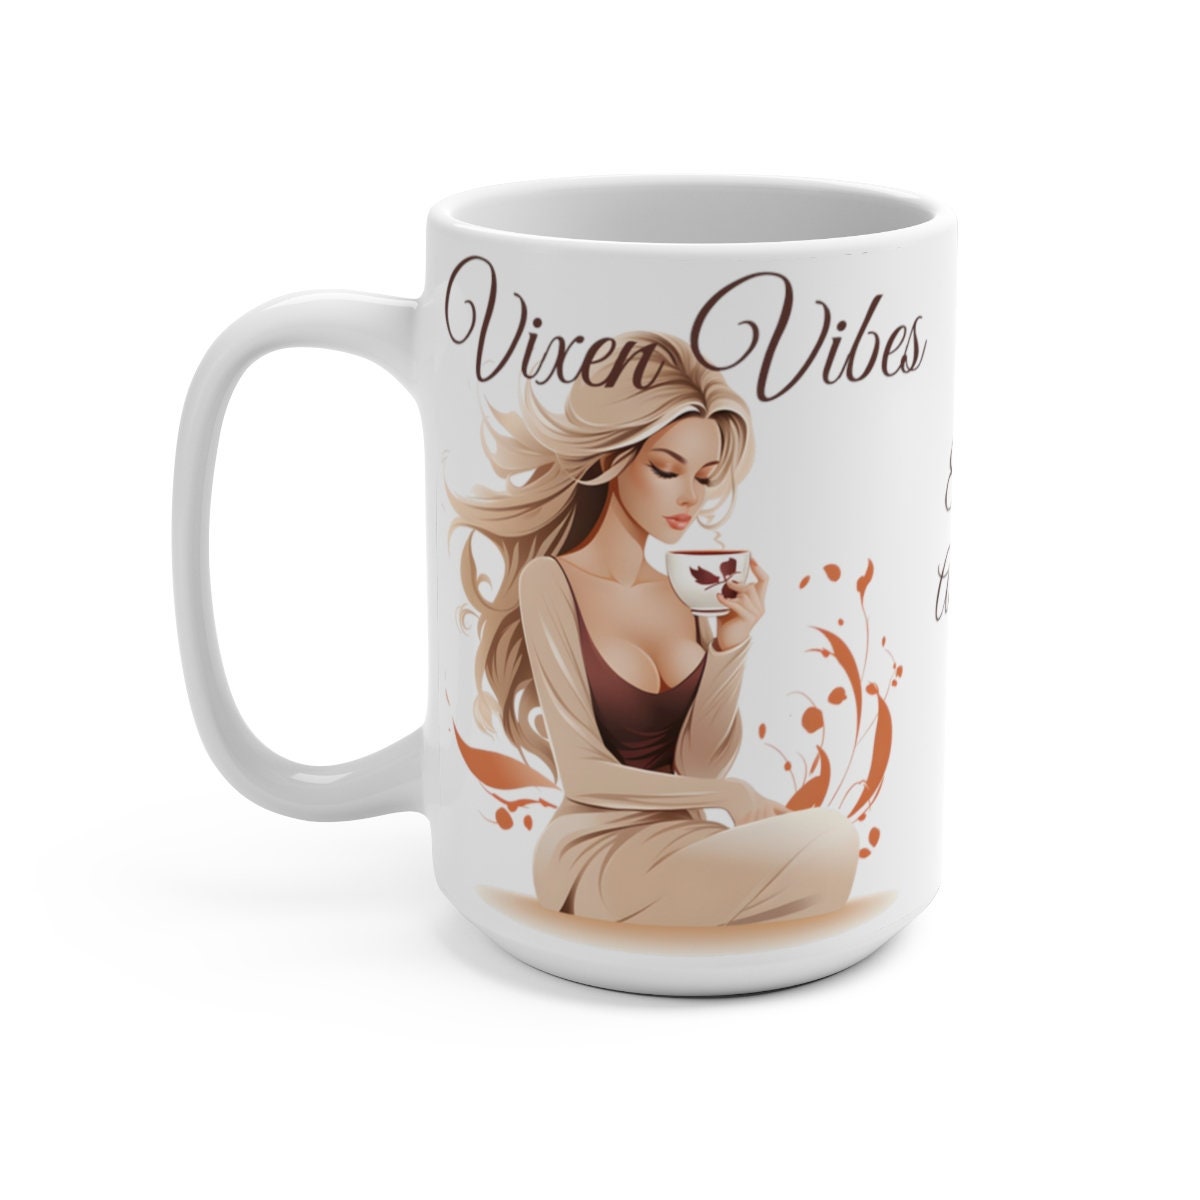 Vixen Coffee Cup, Large 15oz Fox Coffee Mug, Embrace The Adventure, Hotwife Lifestyle